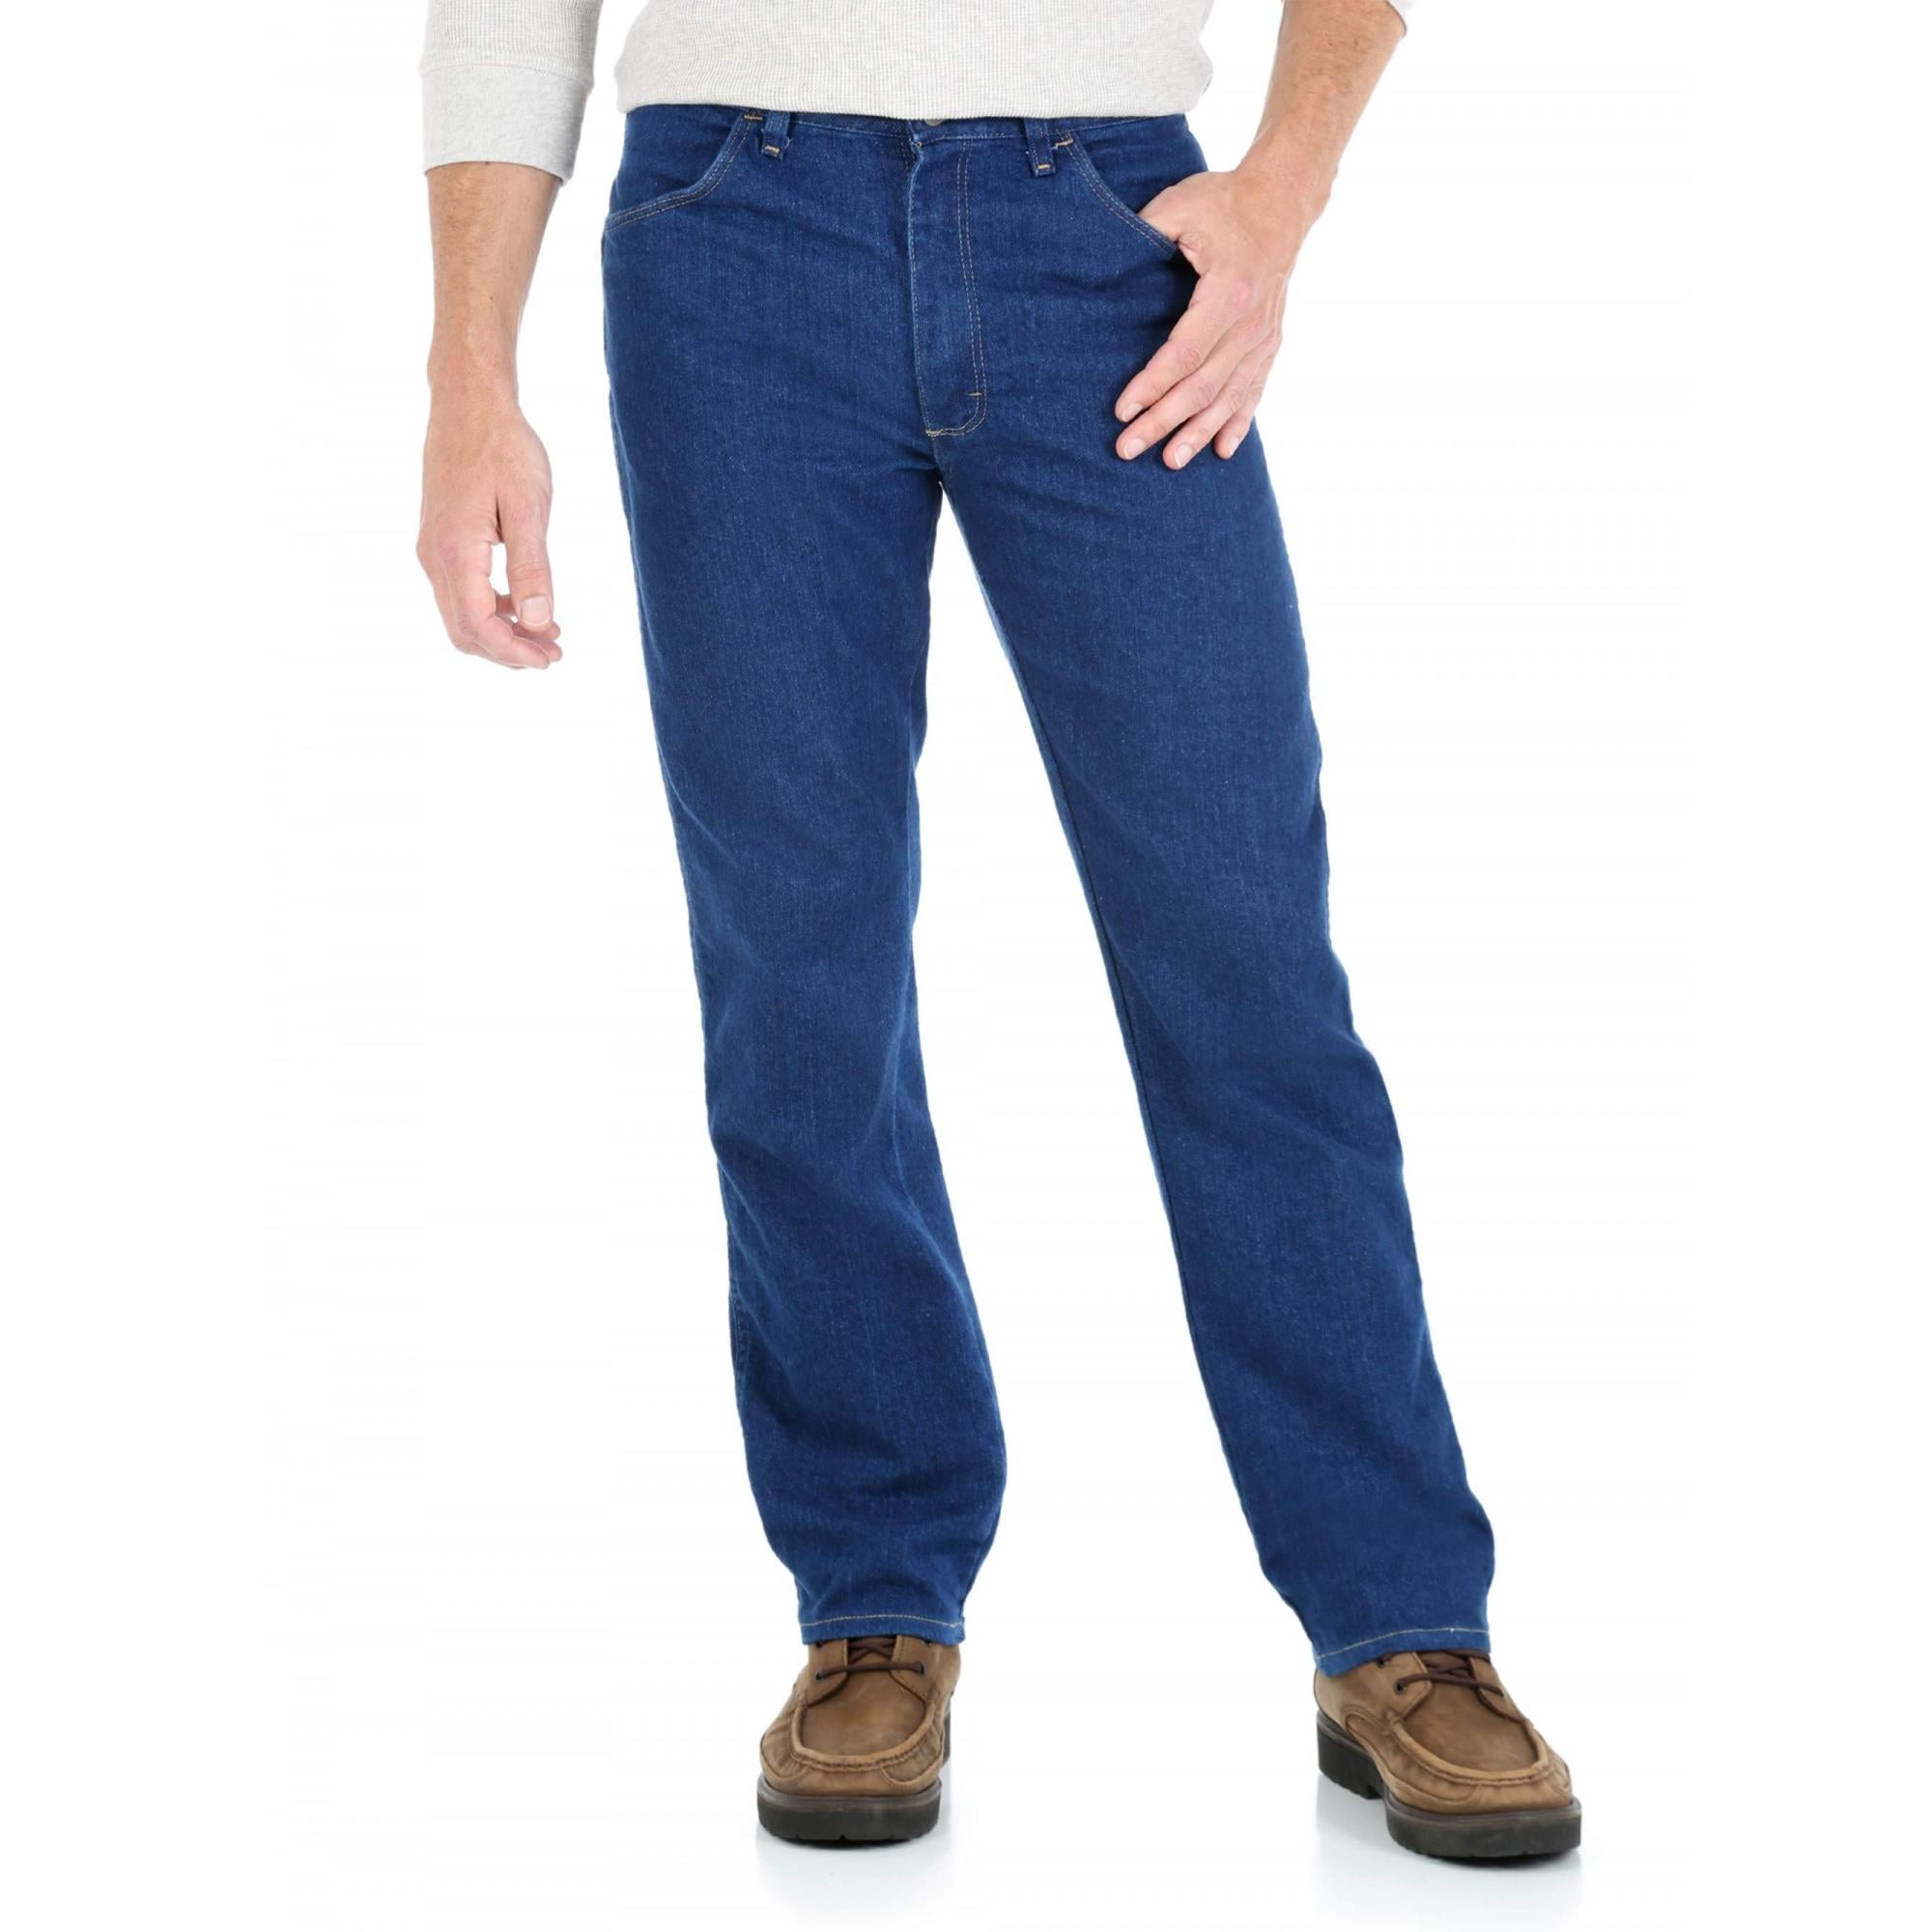 Wrangler - Wrangler Men's Regular Fit Stretch Jeans - Walmart.com ...